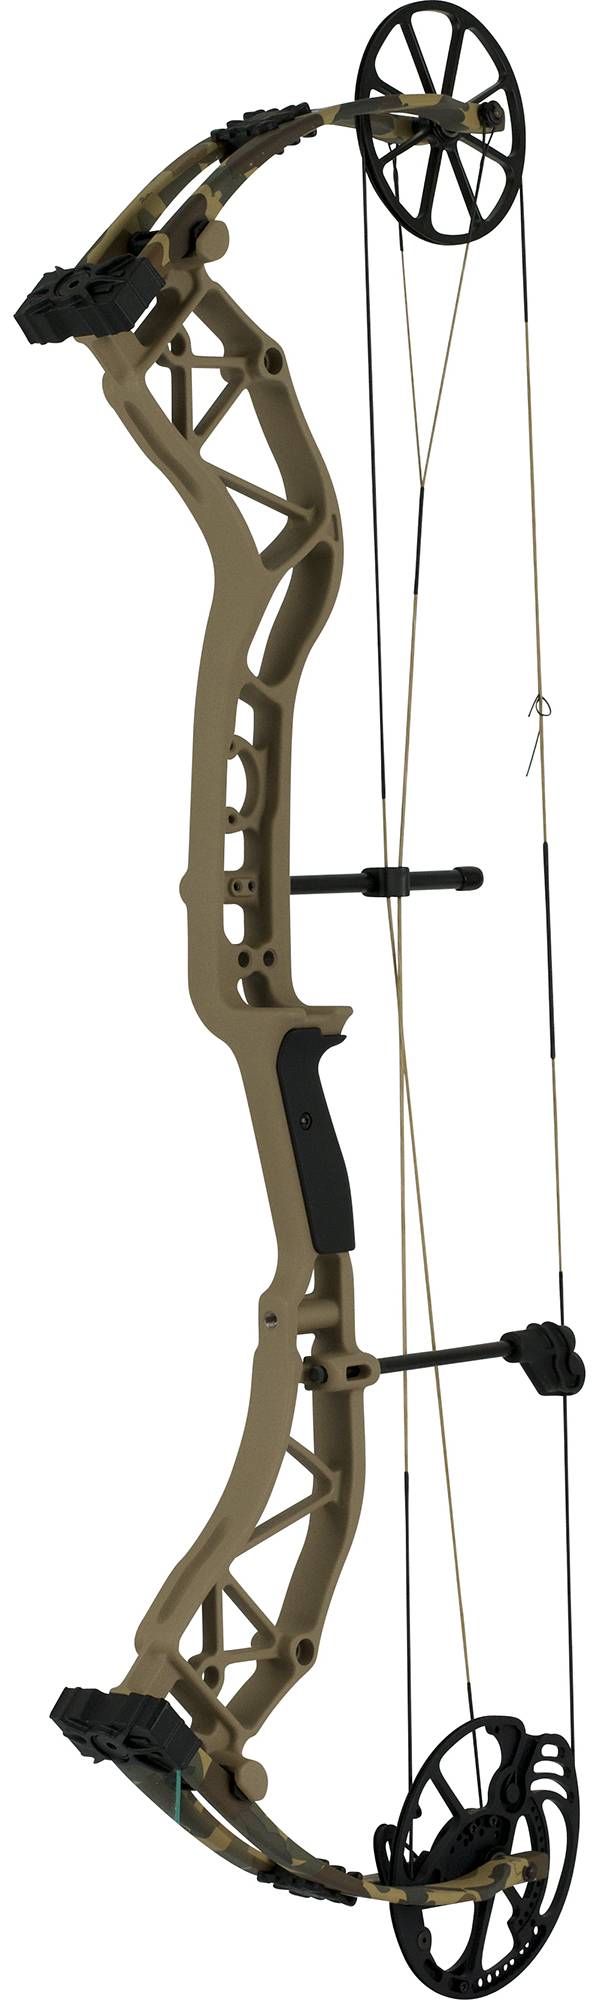 Bear Archery Hunt Public Adapt Compound Bow – 320 FPS product image